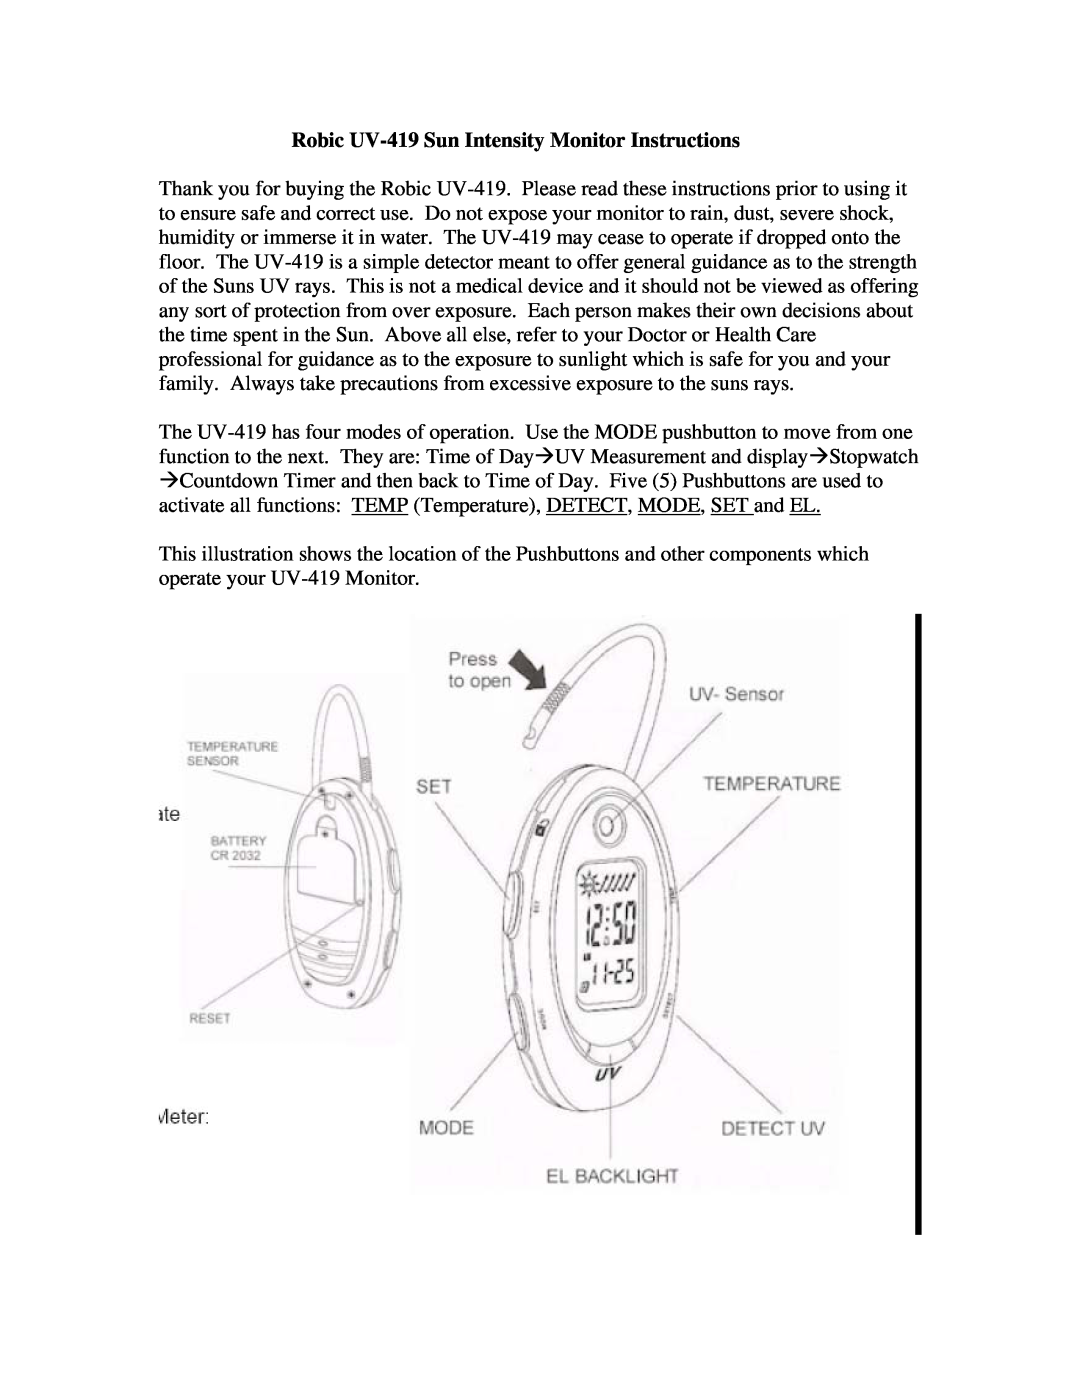 Robic manual Robic UV-419Sun Intensity Monitor Instructions 